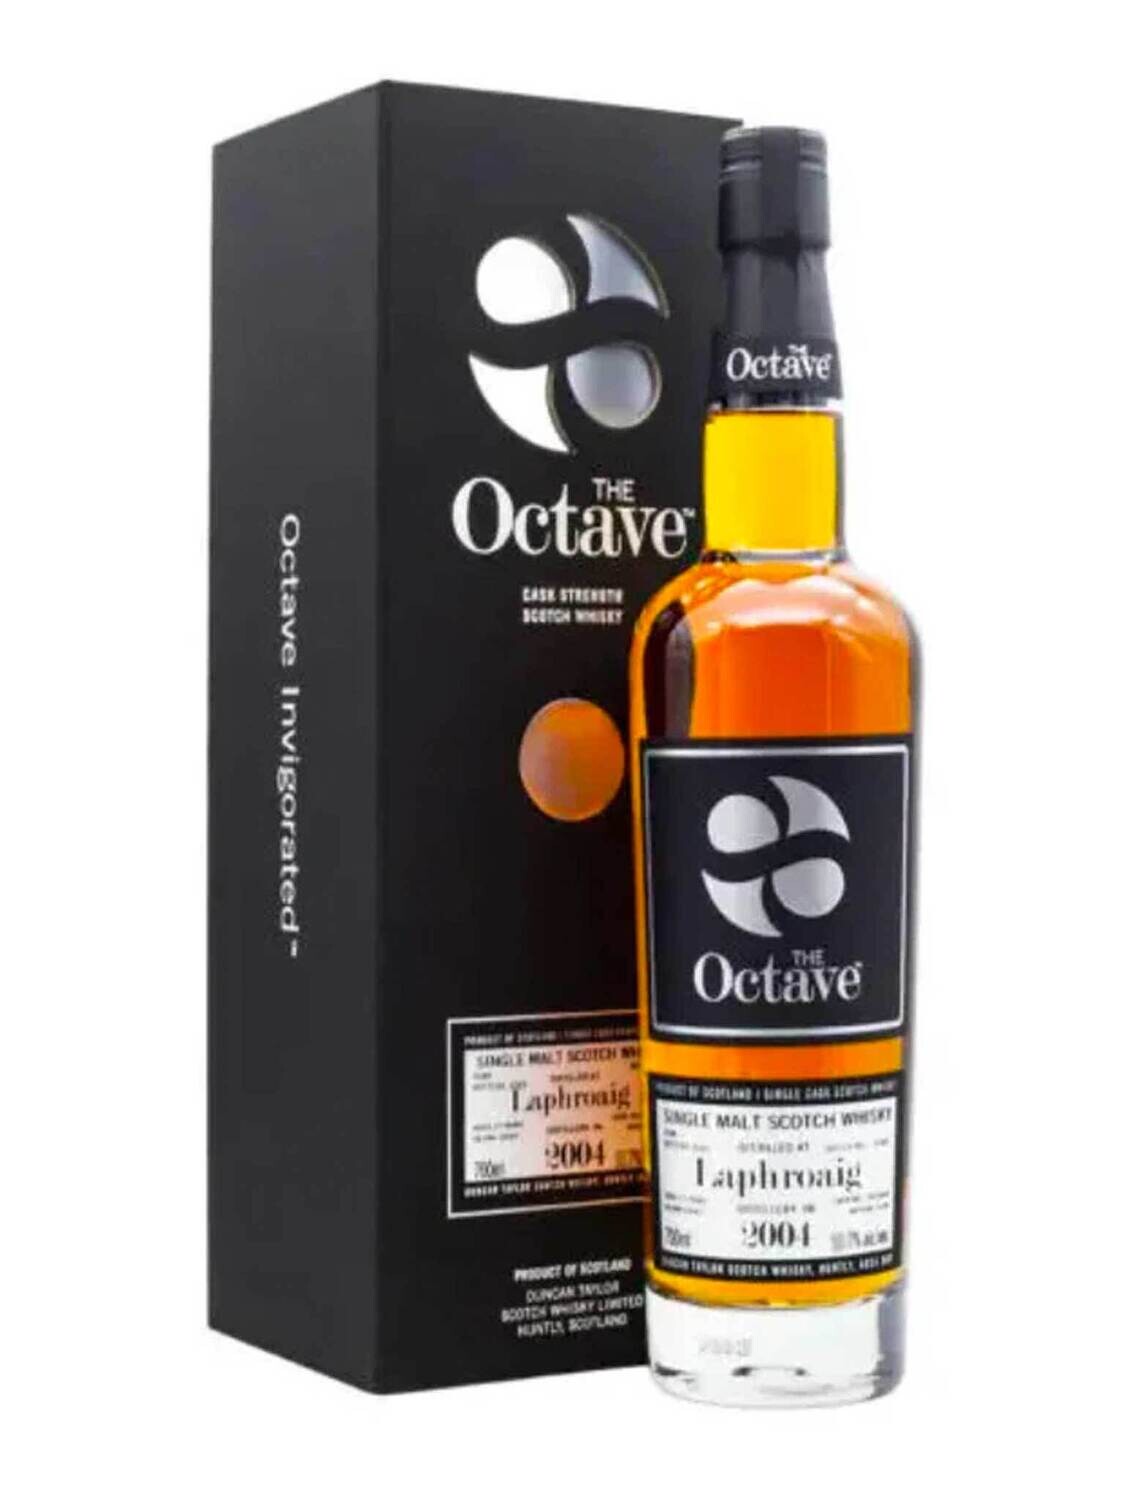 Octave Premium Laphroaig 2004 17 Year Old Single Malt Scotch Whisky Cask #5633389 54.8% ABV 750mL